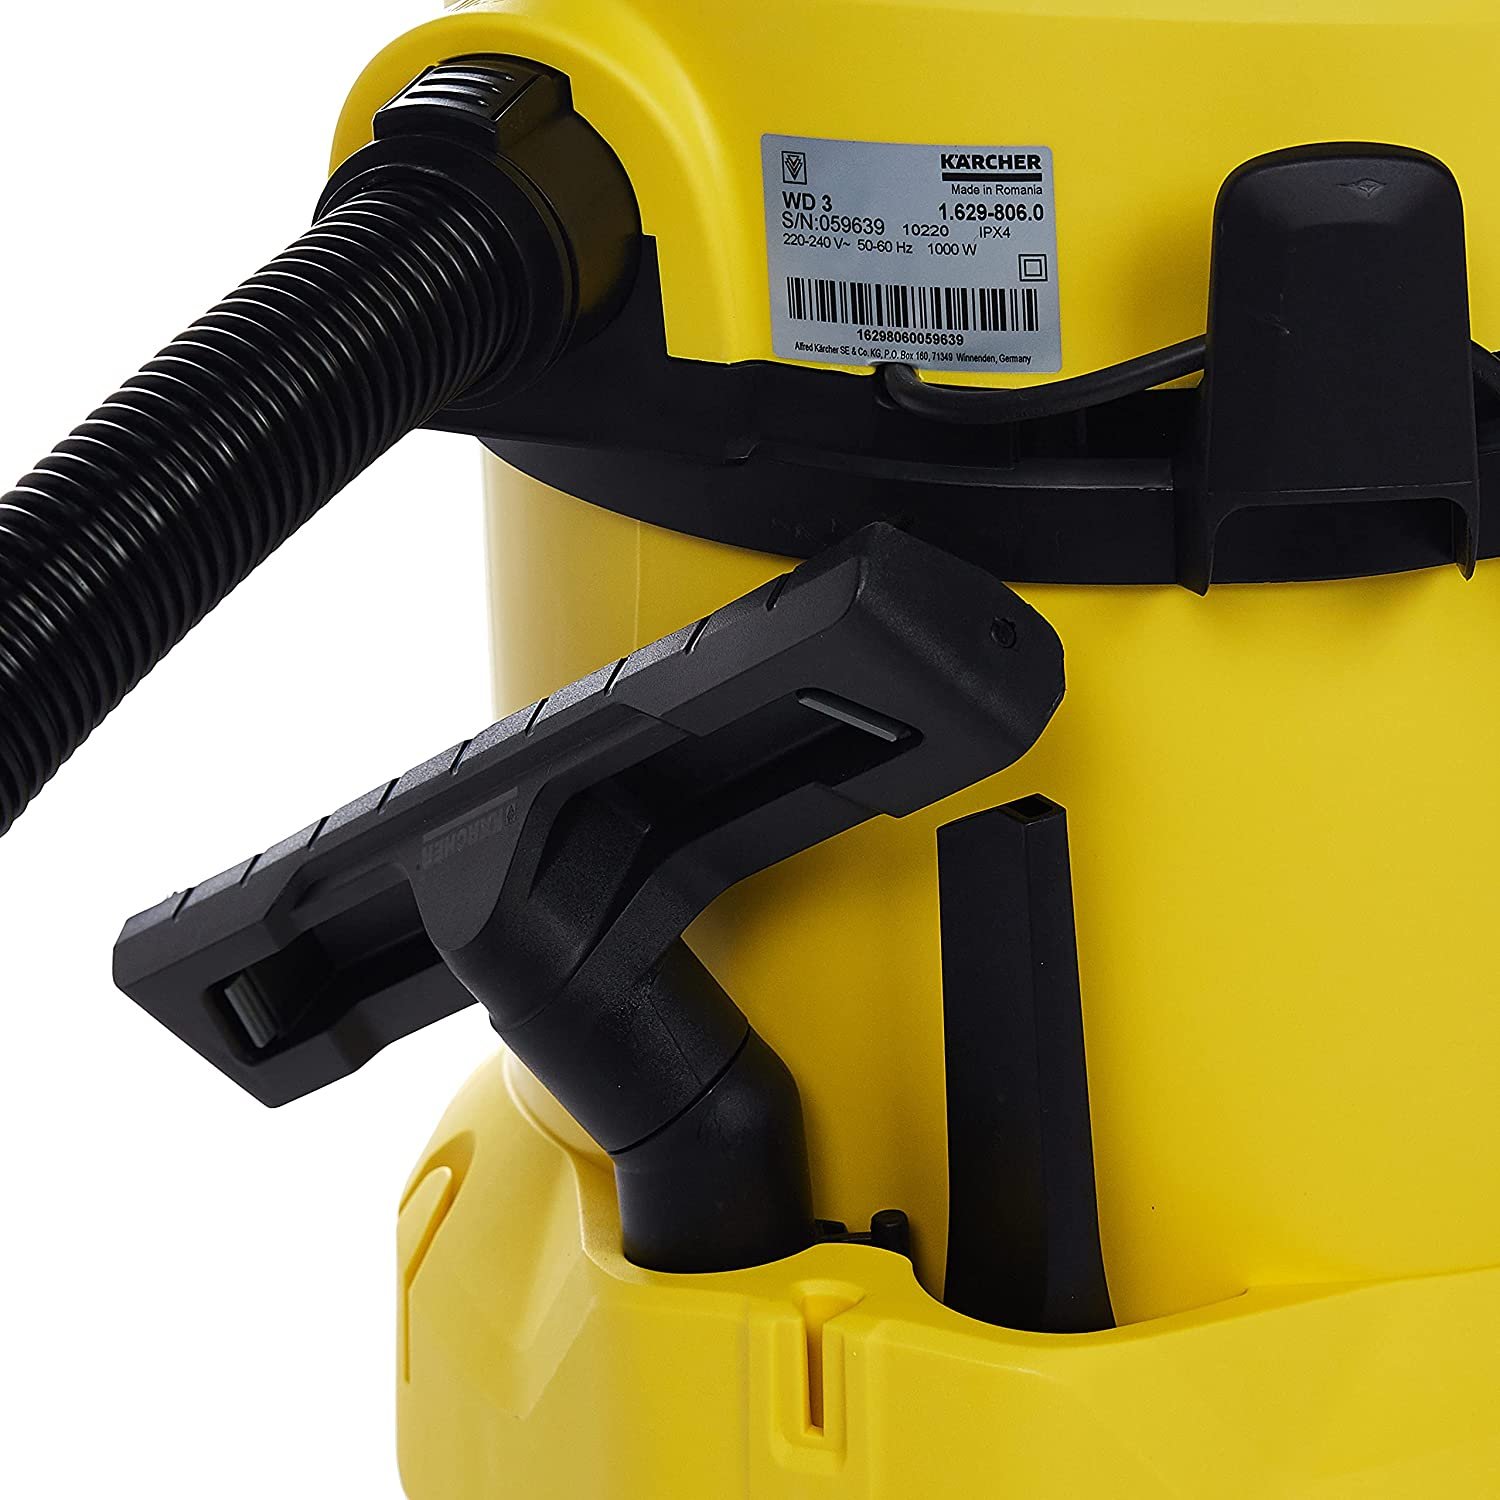 Karcher WD3 Multipurpose Vacuum Cleane wd3 v-17/4/20